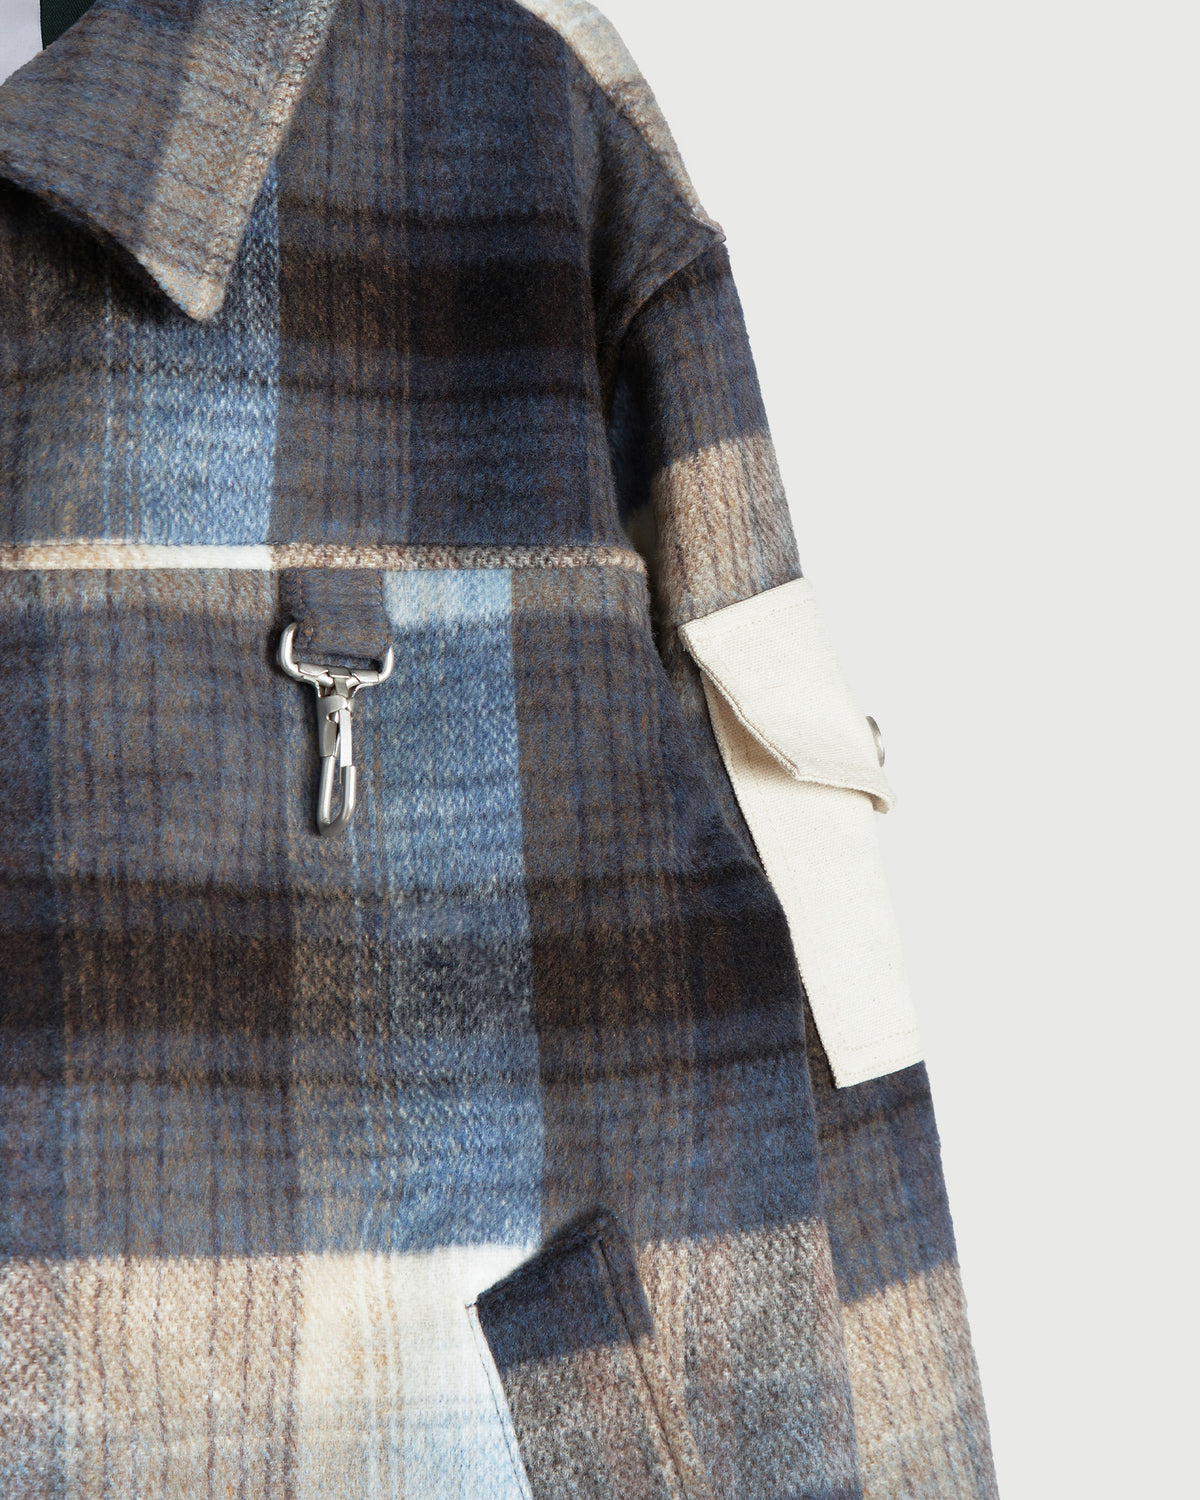 RCI Reserve: Work Jacket in Blue Wool Flannel